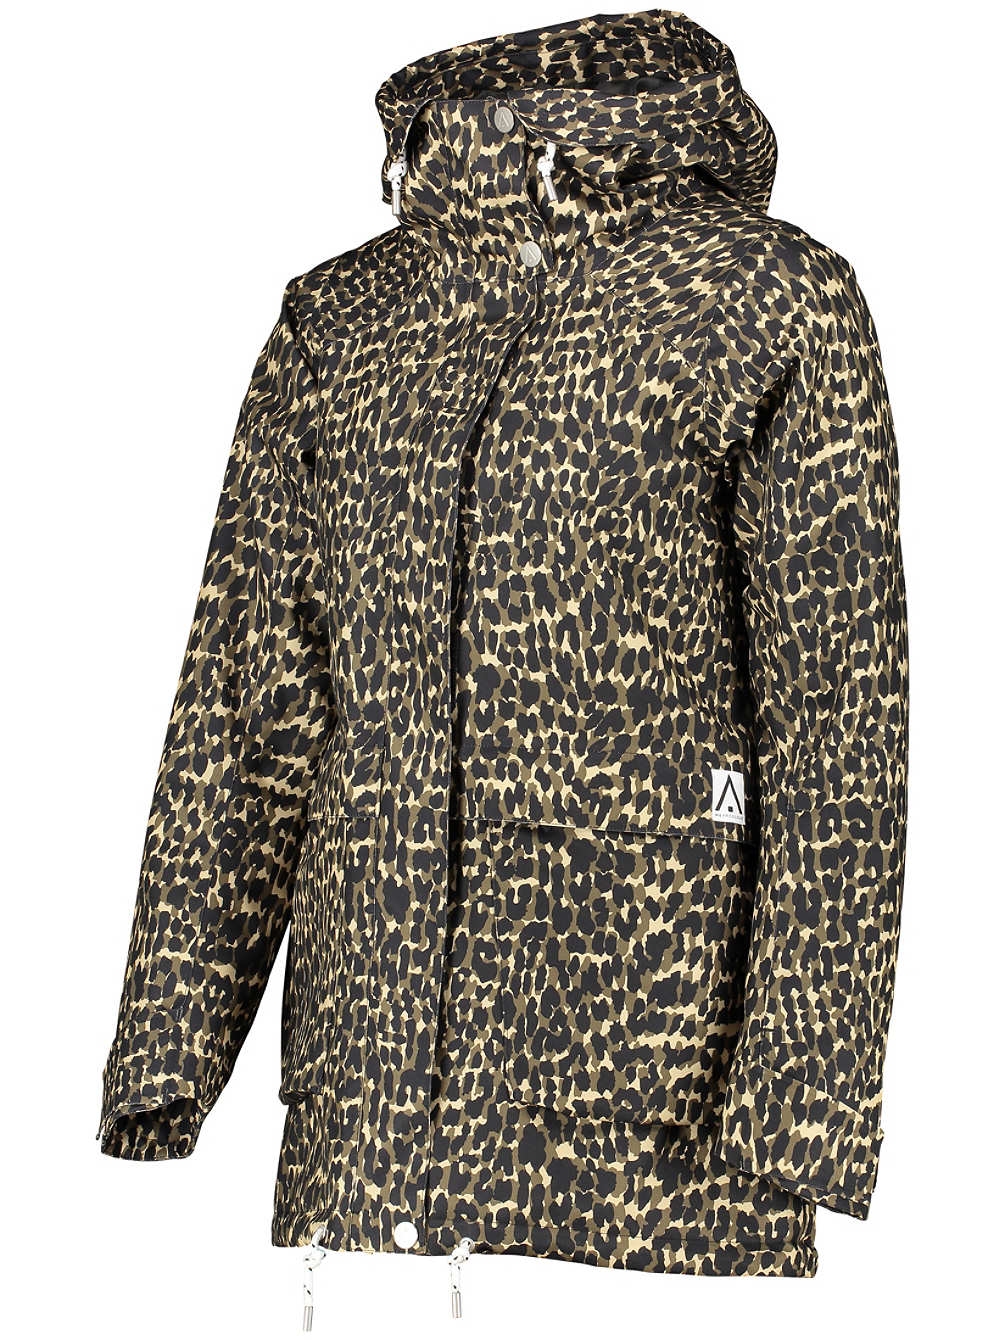 Blaze ski or snowboarding Jacket Forest Leopard print — Dick's Board Store